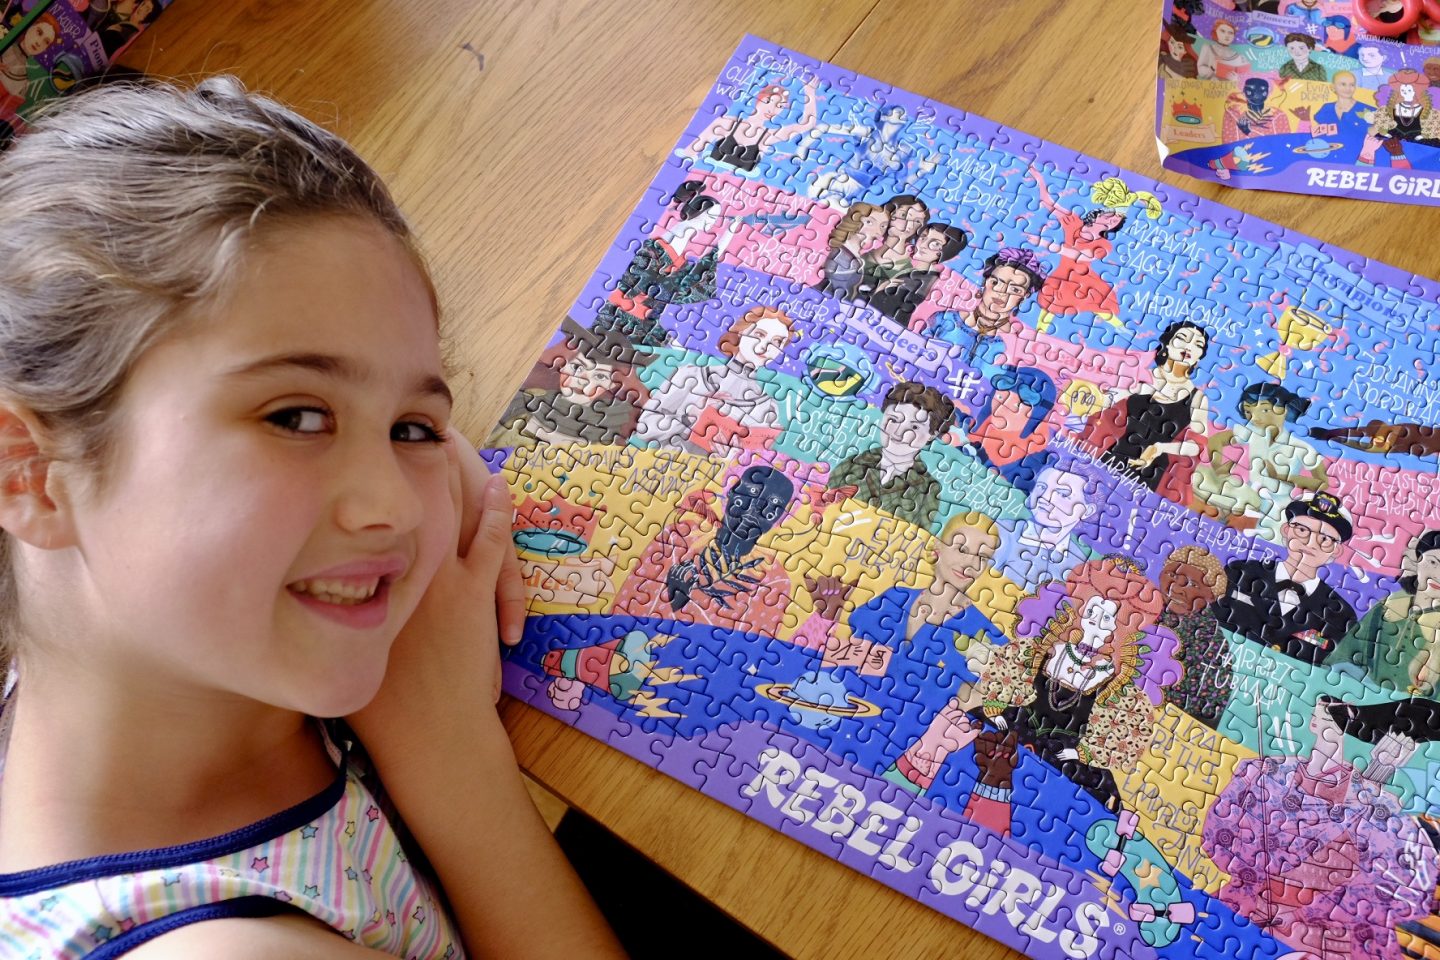 completed rebel girls 500 piece jigsaw